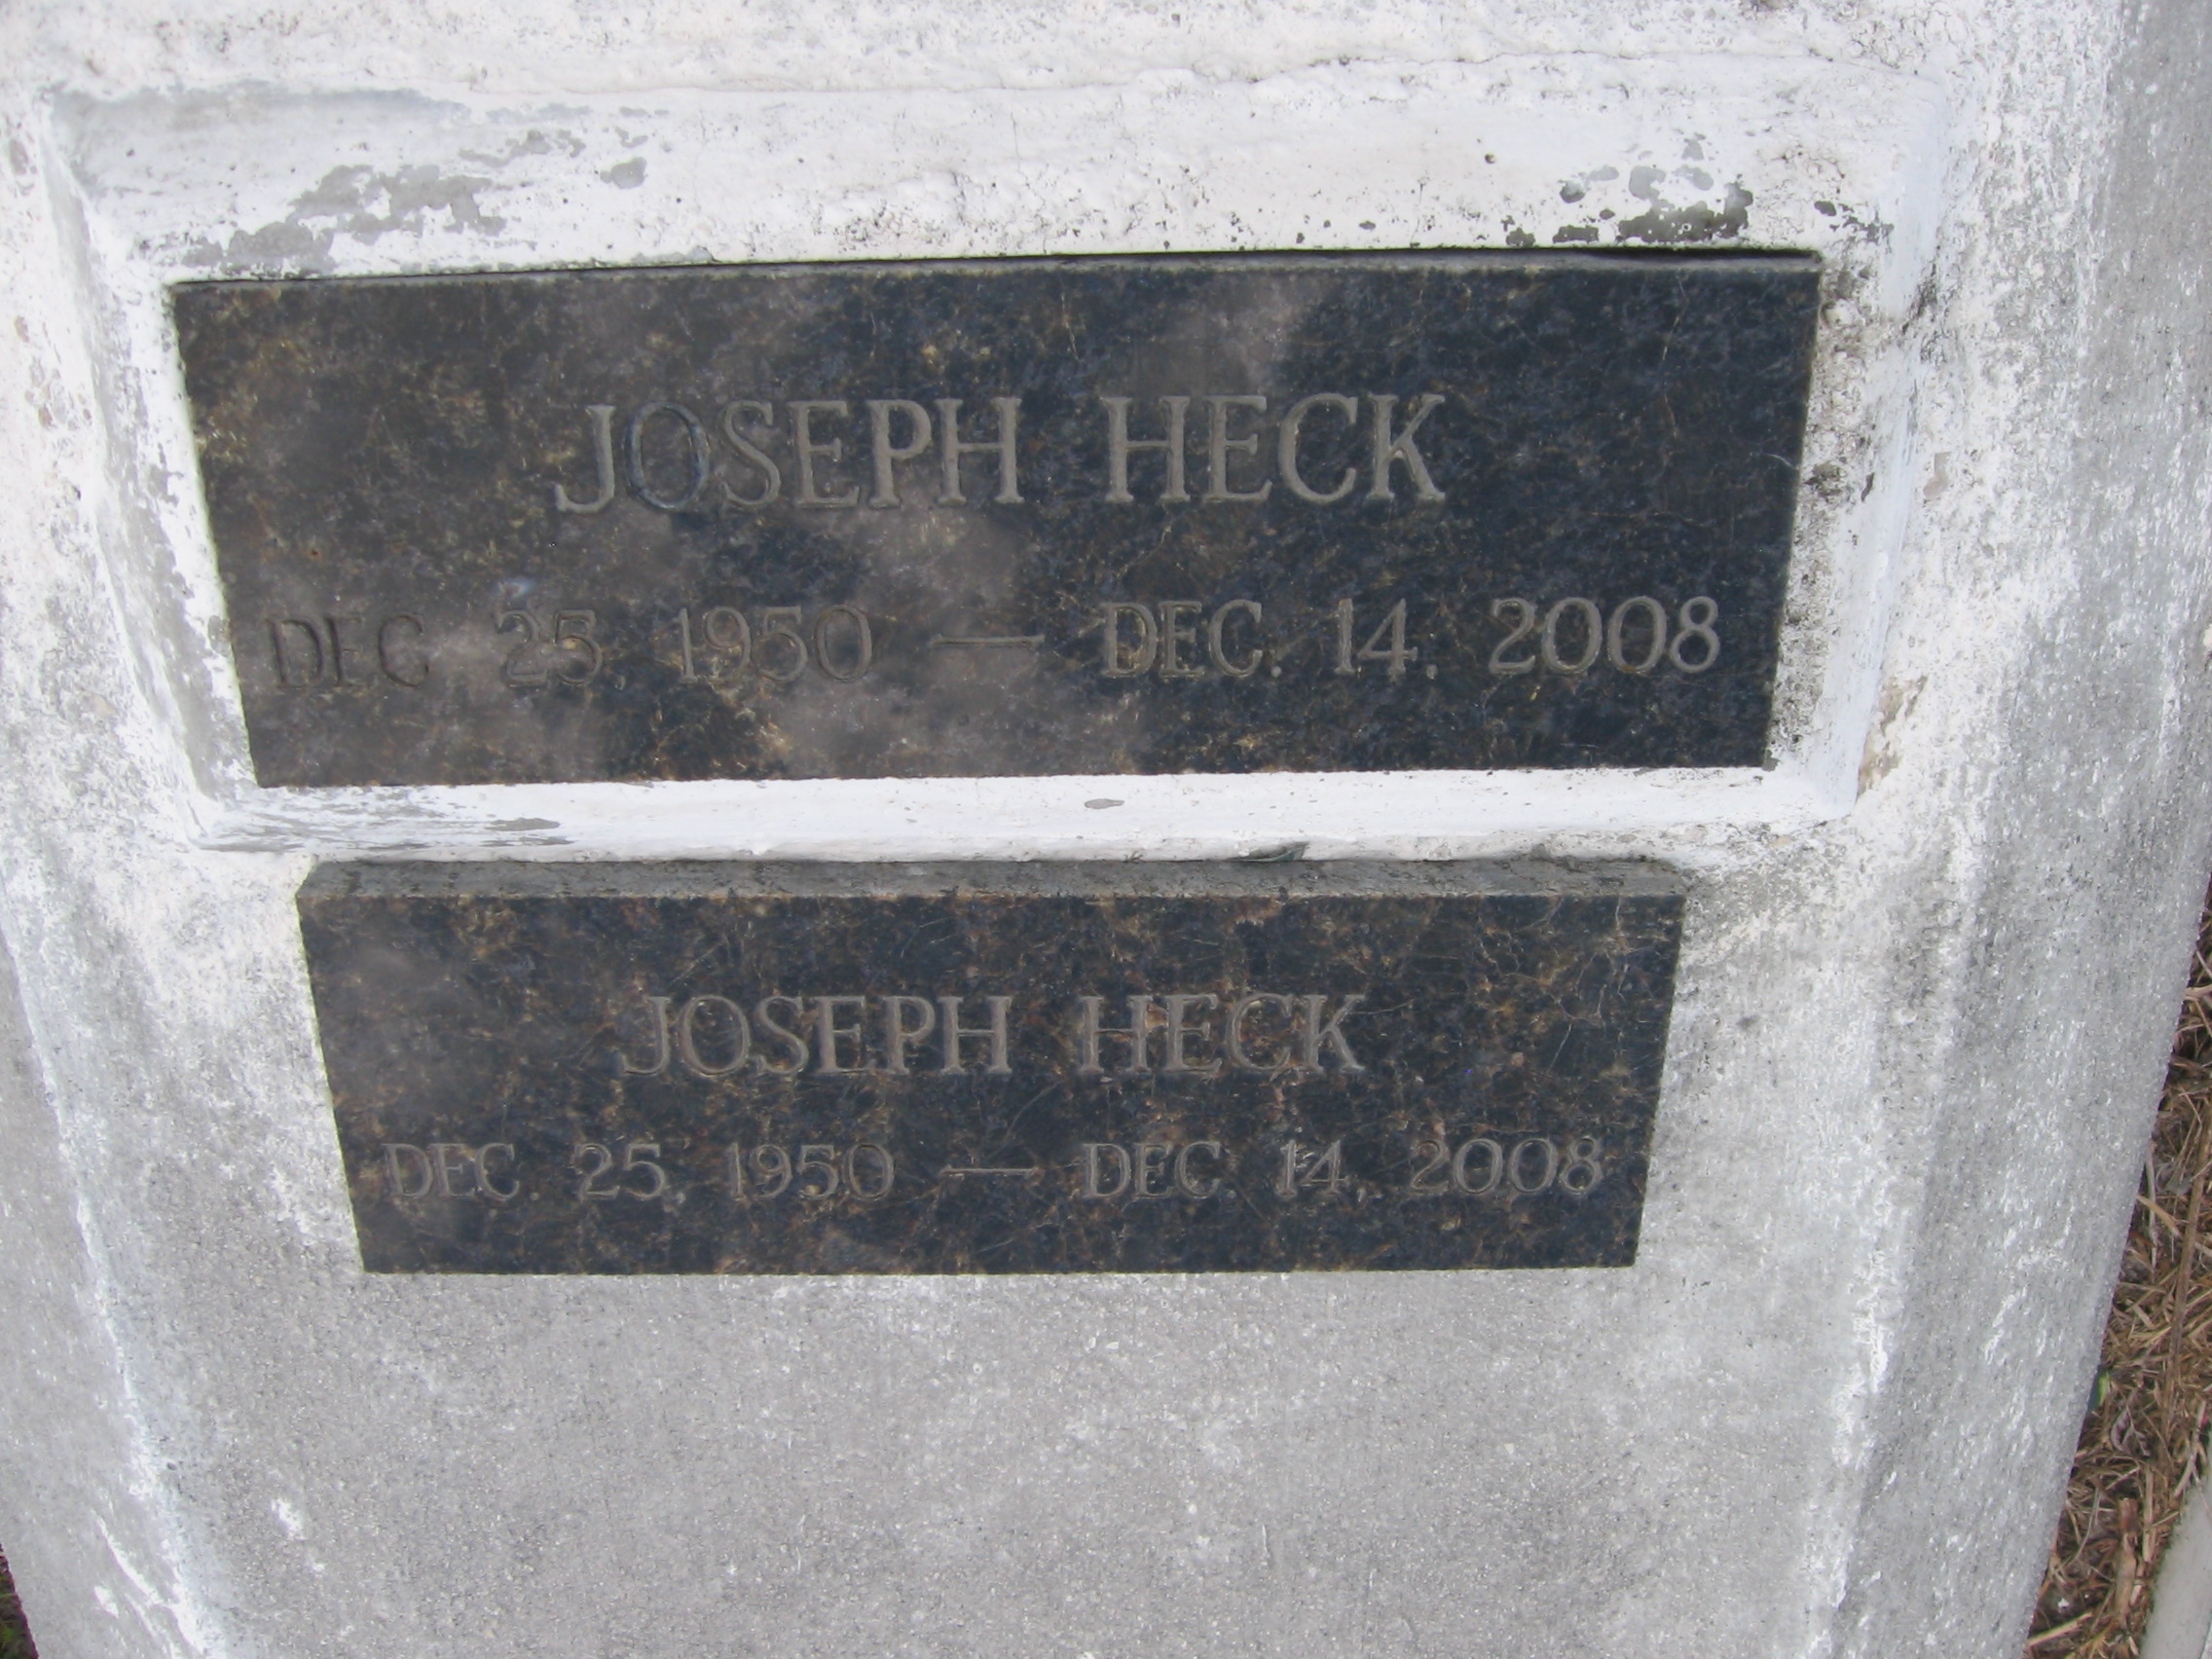 Joseph Heck